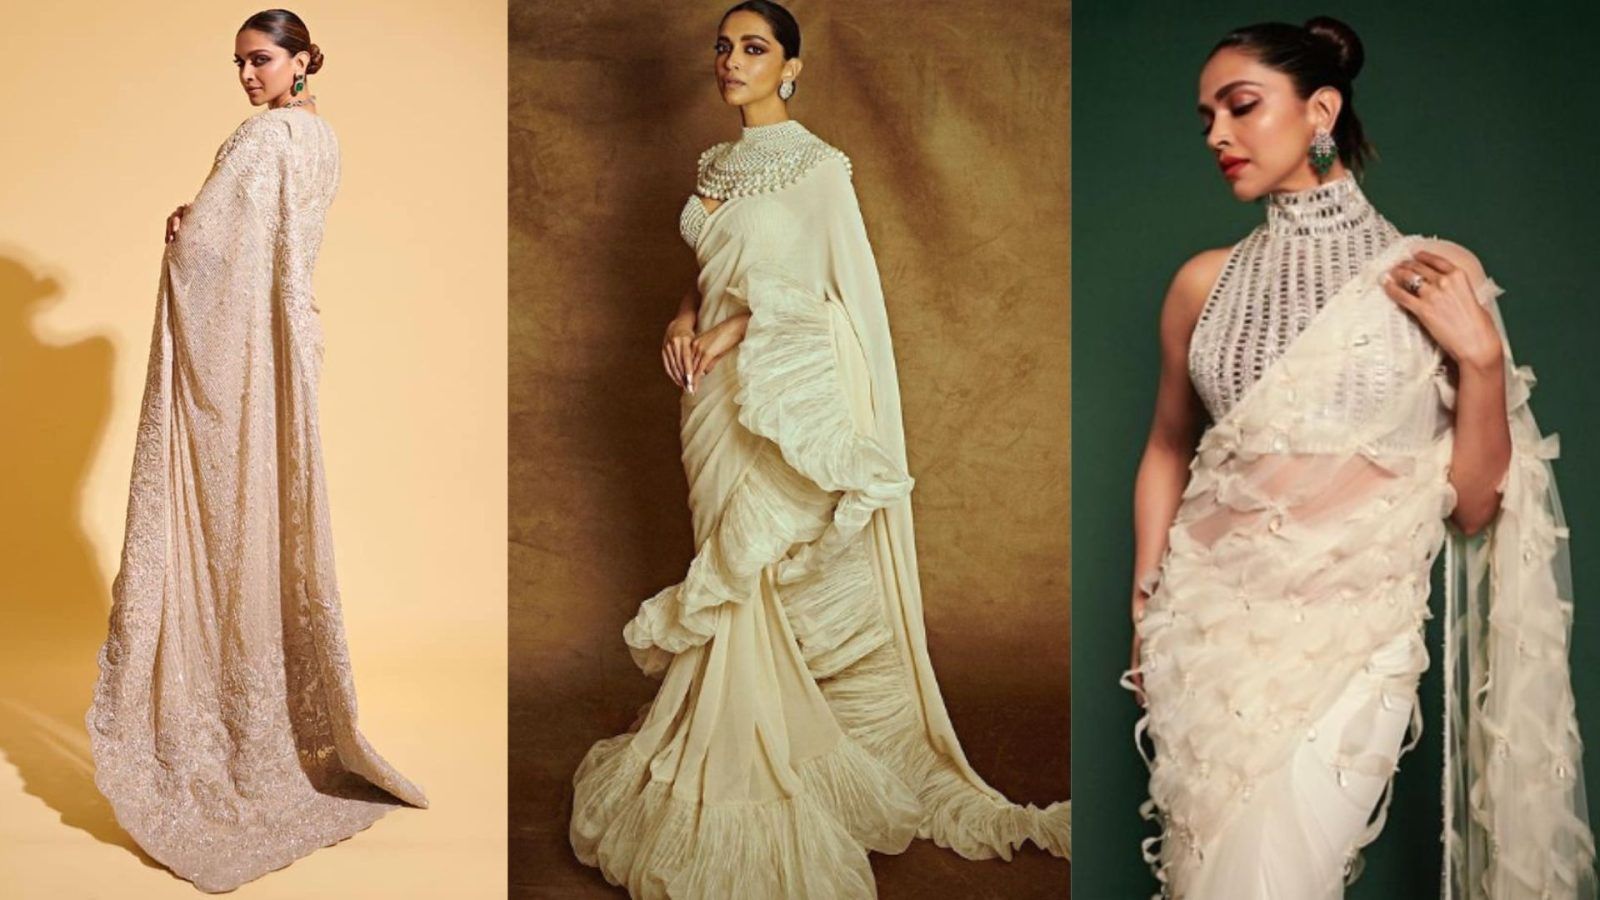 Deepika Padukone Looks Like No Ordinary Disney PrincessIn Her White Gown